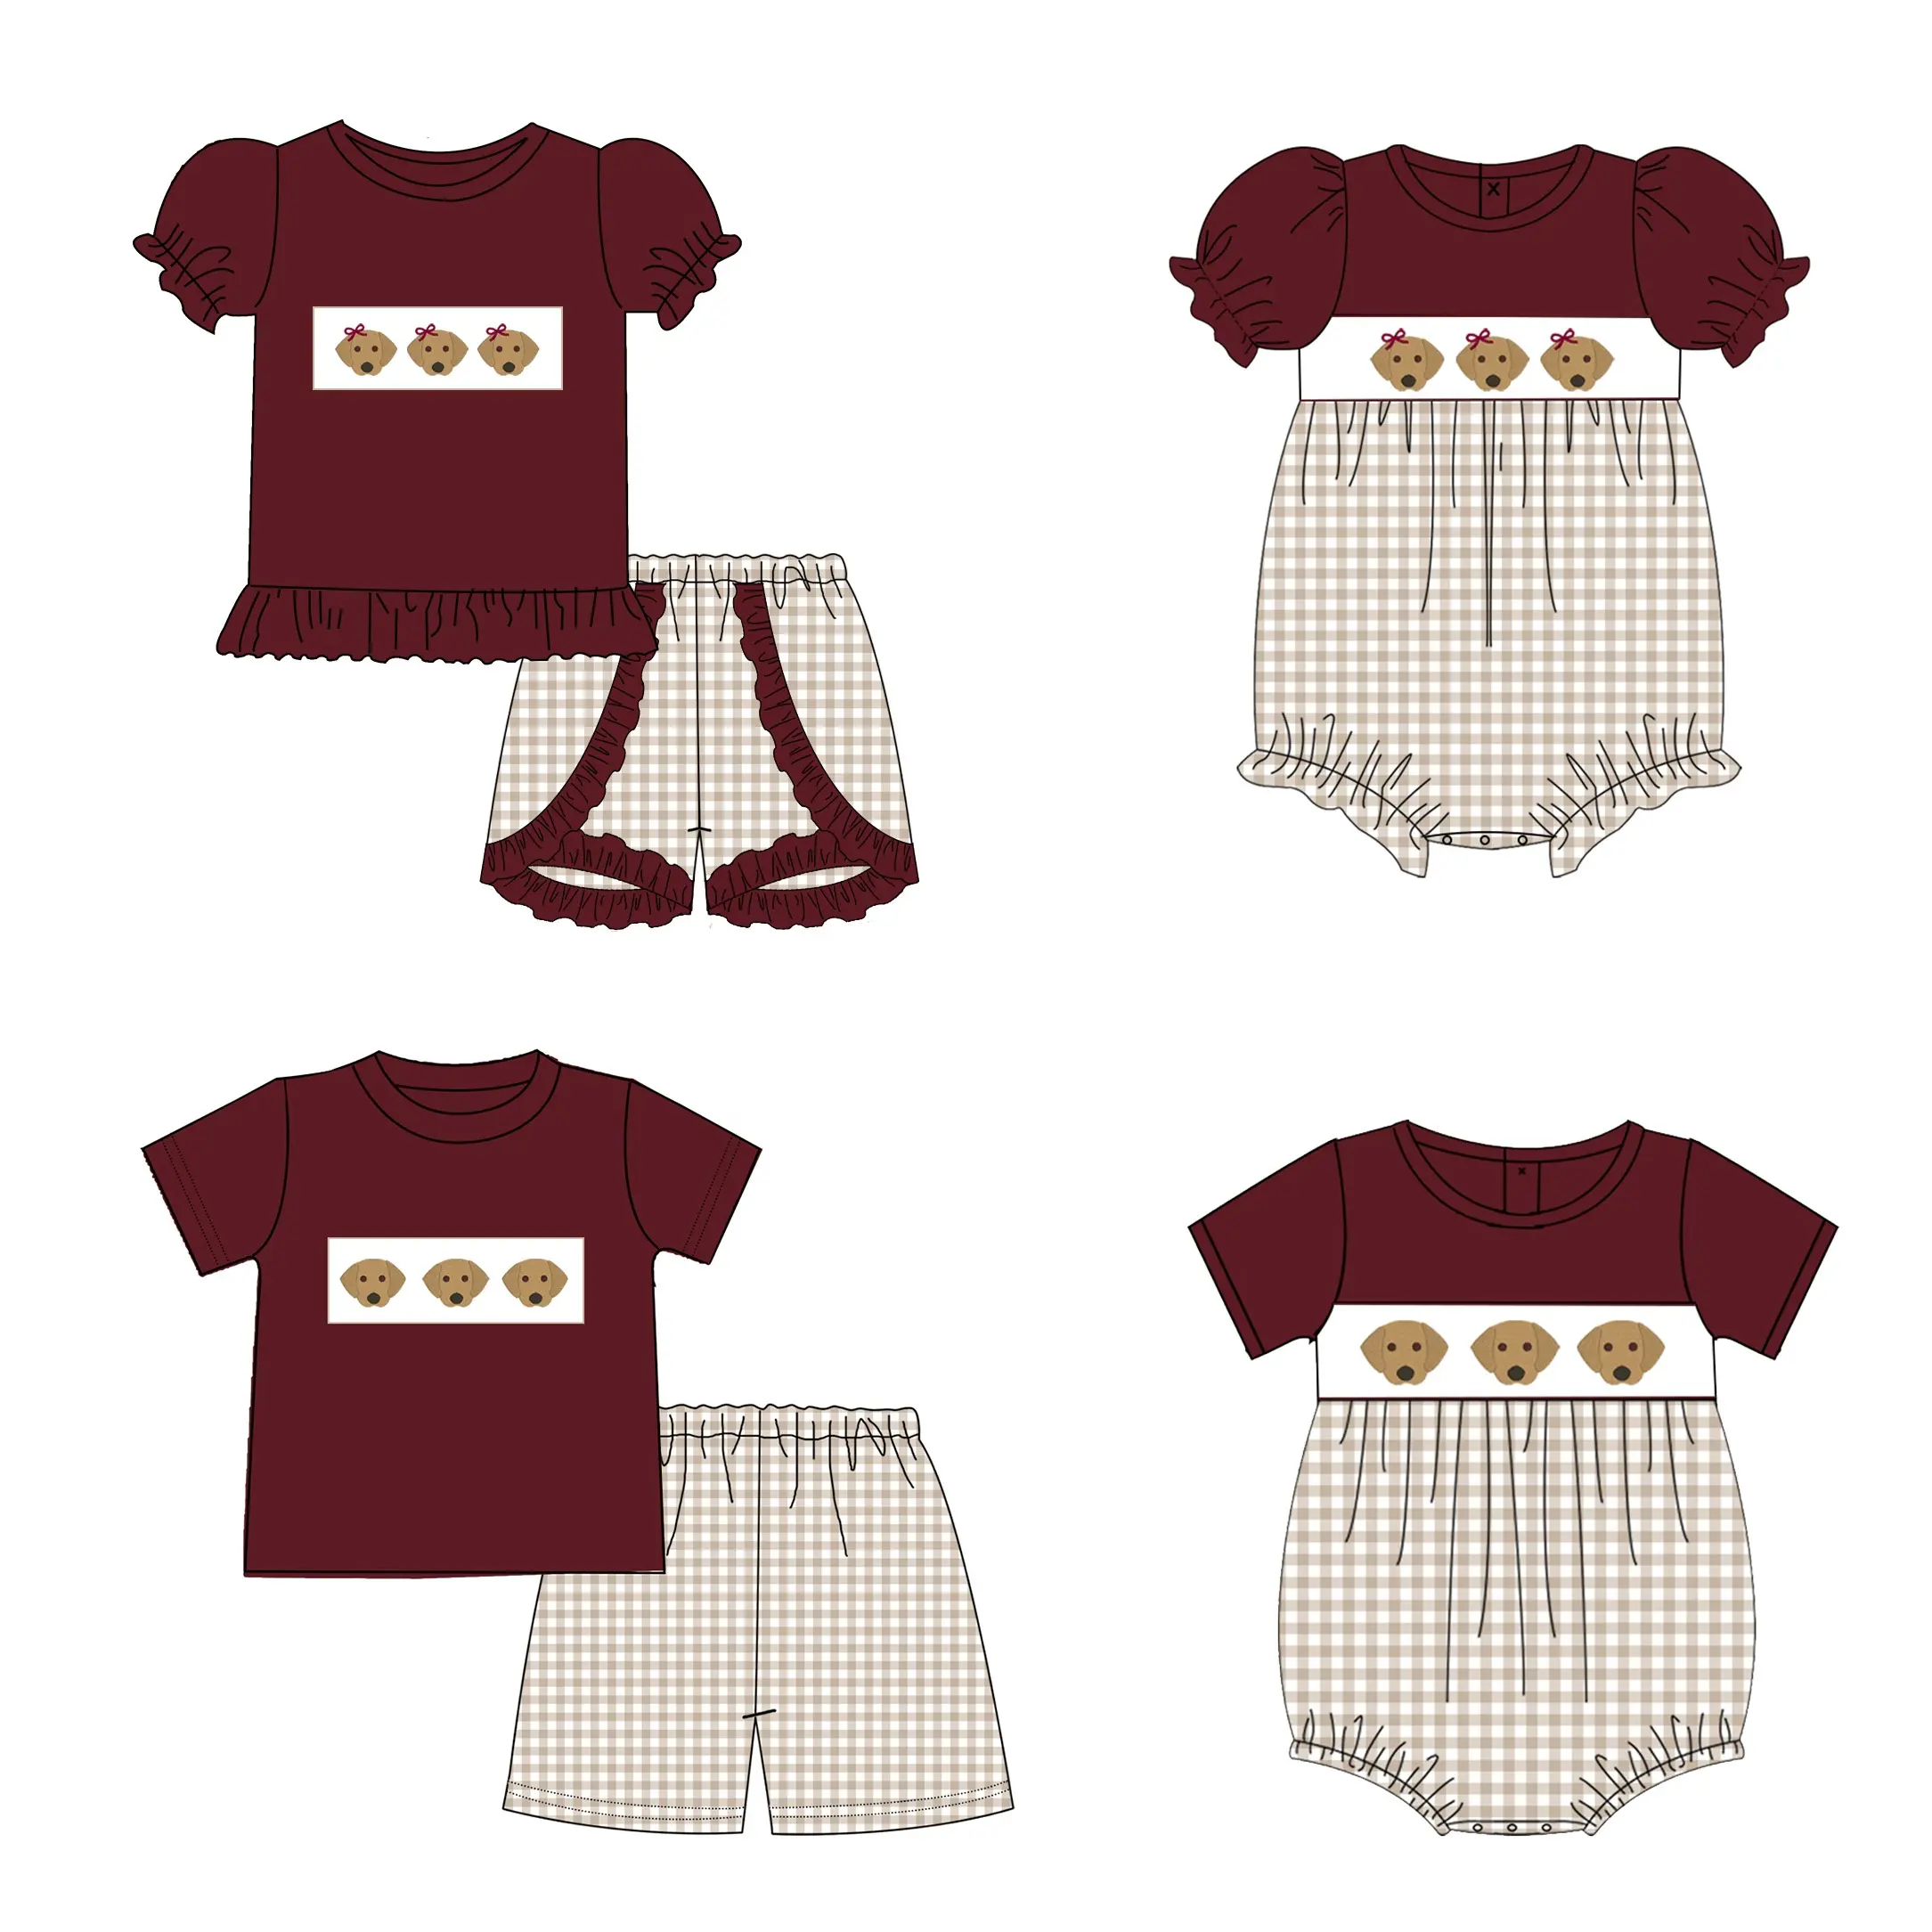 Puresun newest designs summer children clothes maroon color little girl cotton boutique outfits puppy appliques kids outfits